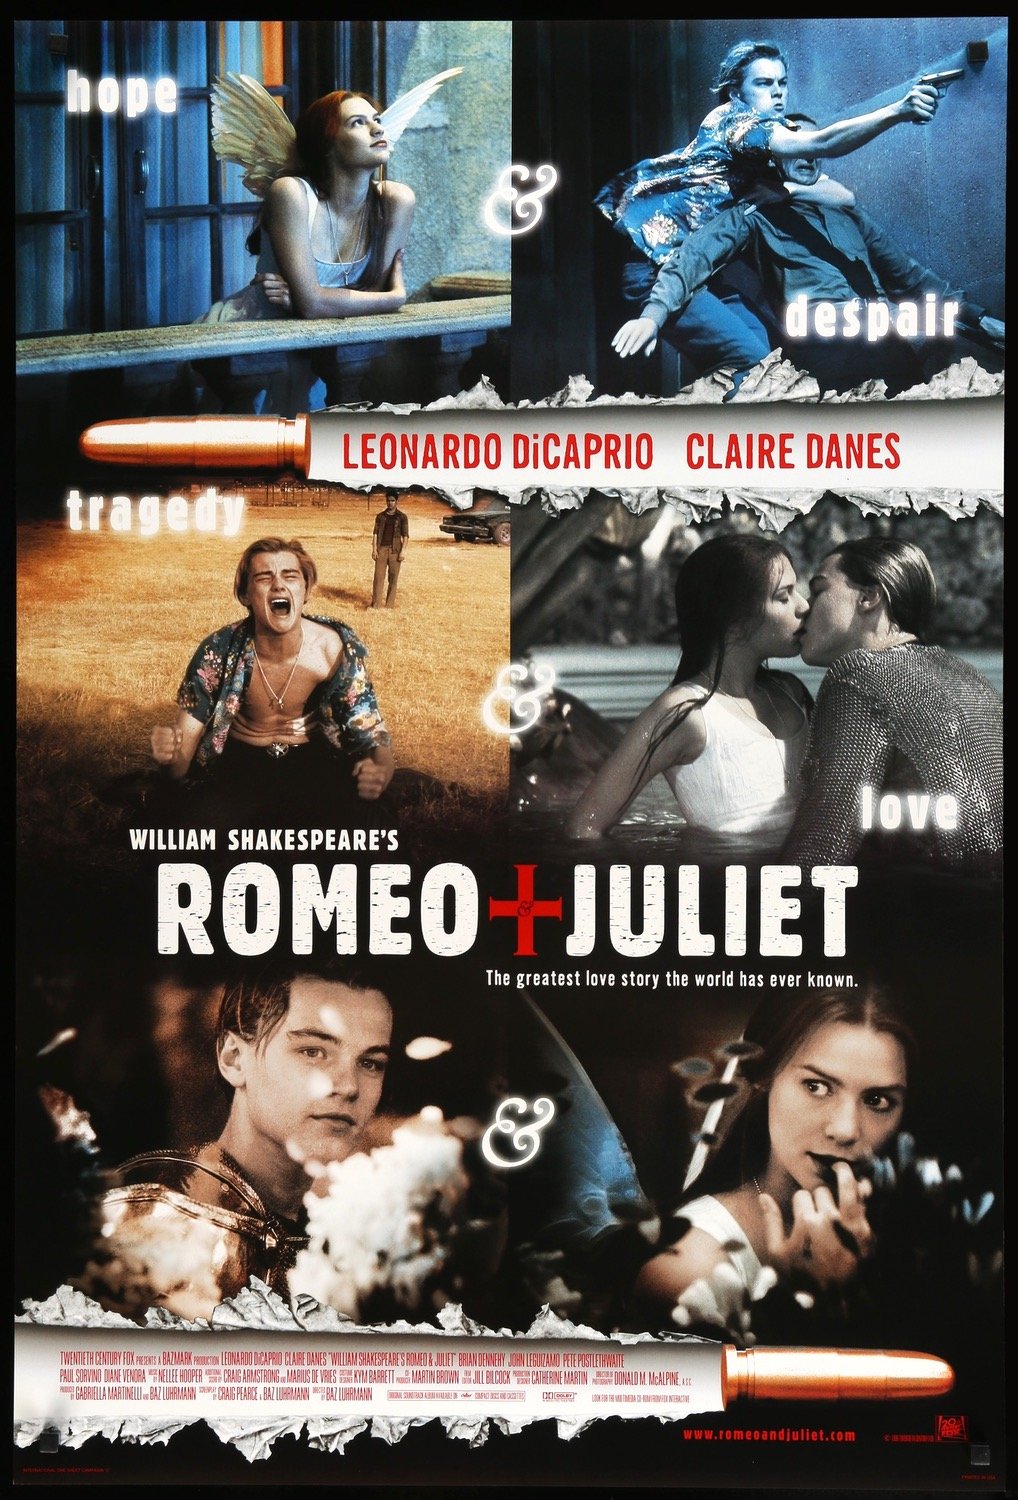 Romeo and Juliet (1996) original movie poster for sale at Original Film Art